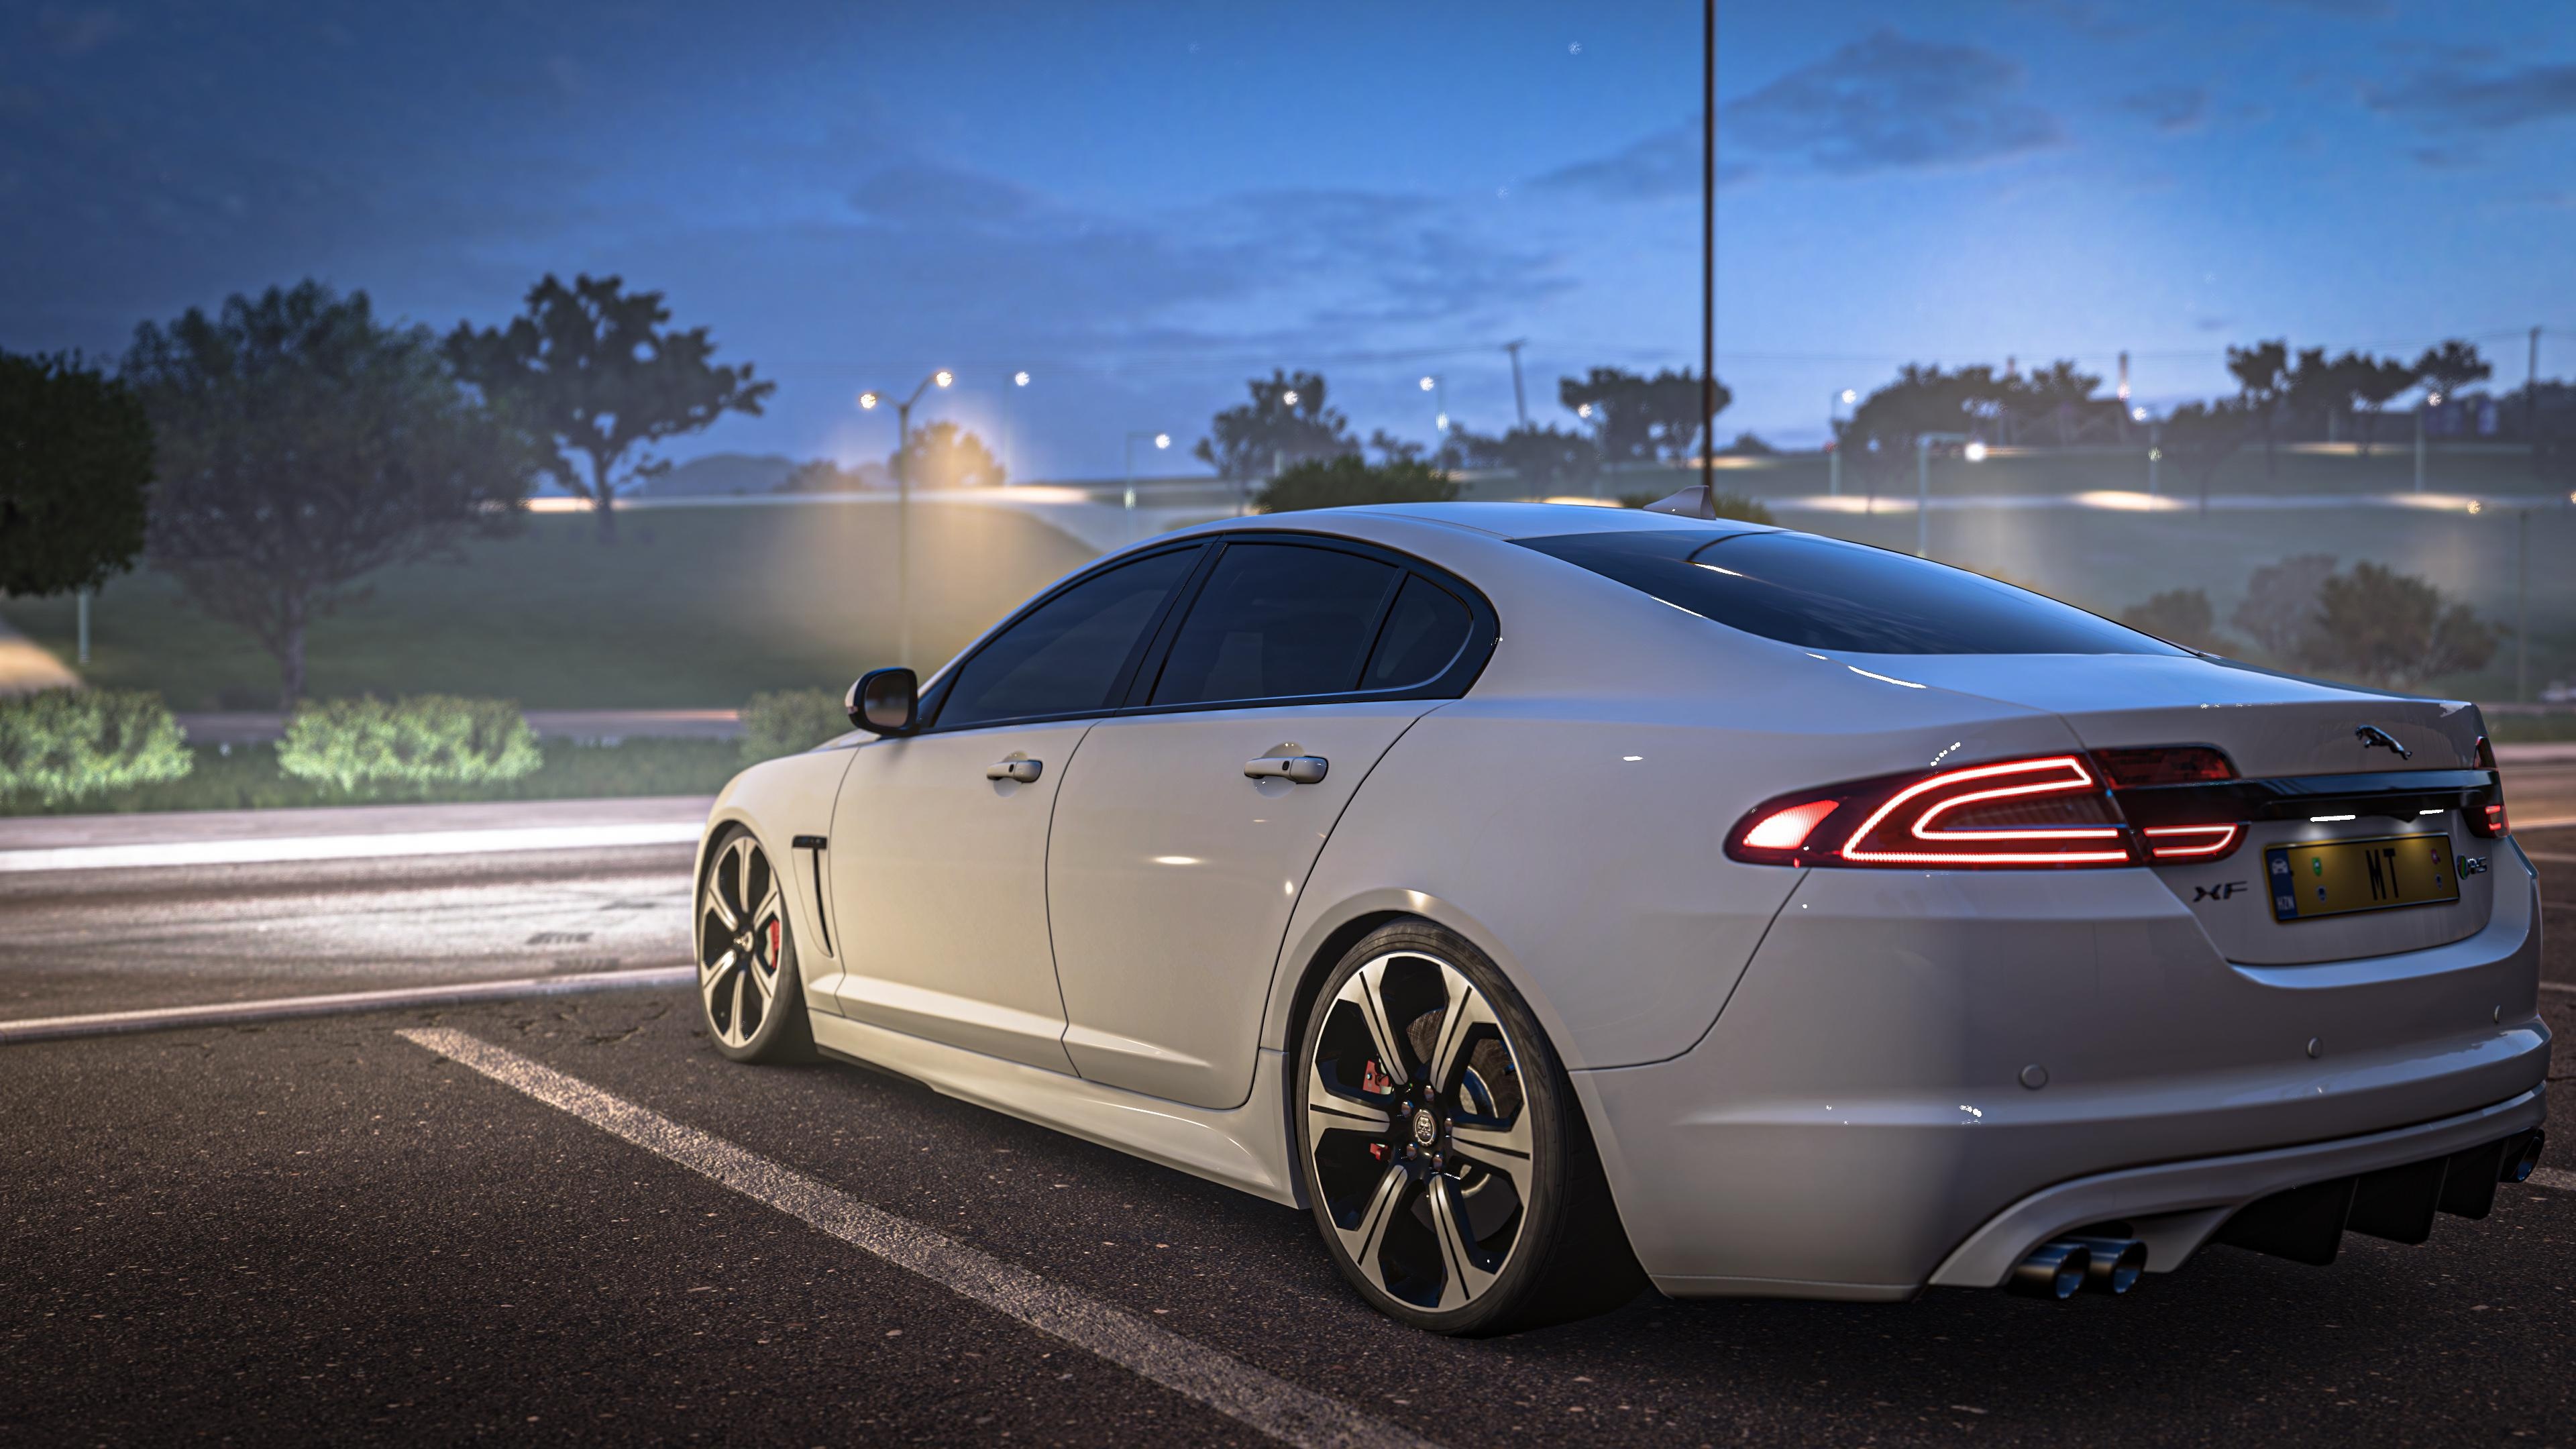 Sporty Jaguar XF, Performance variant, Racing-inspired, Power on the road, 3840x2160 4K Desktop